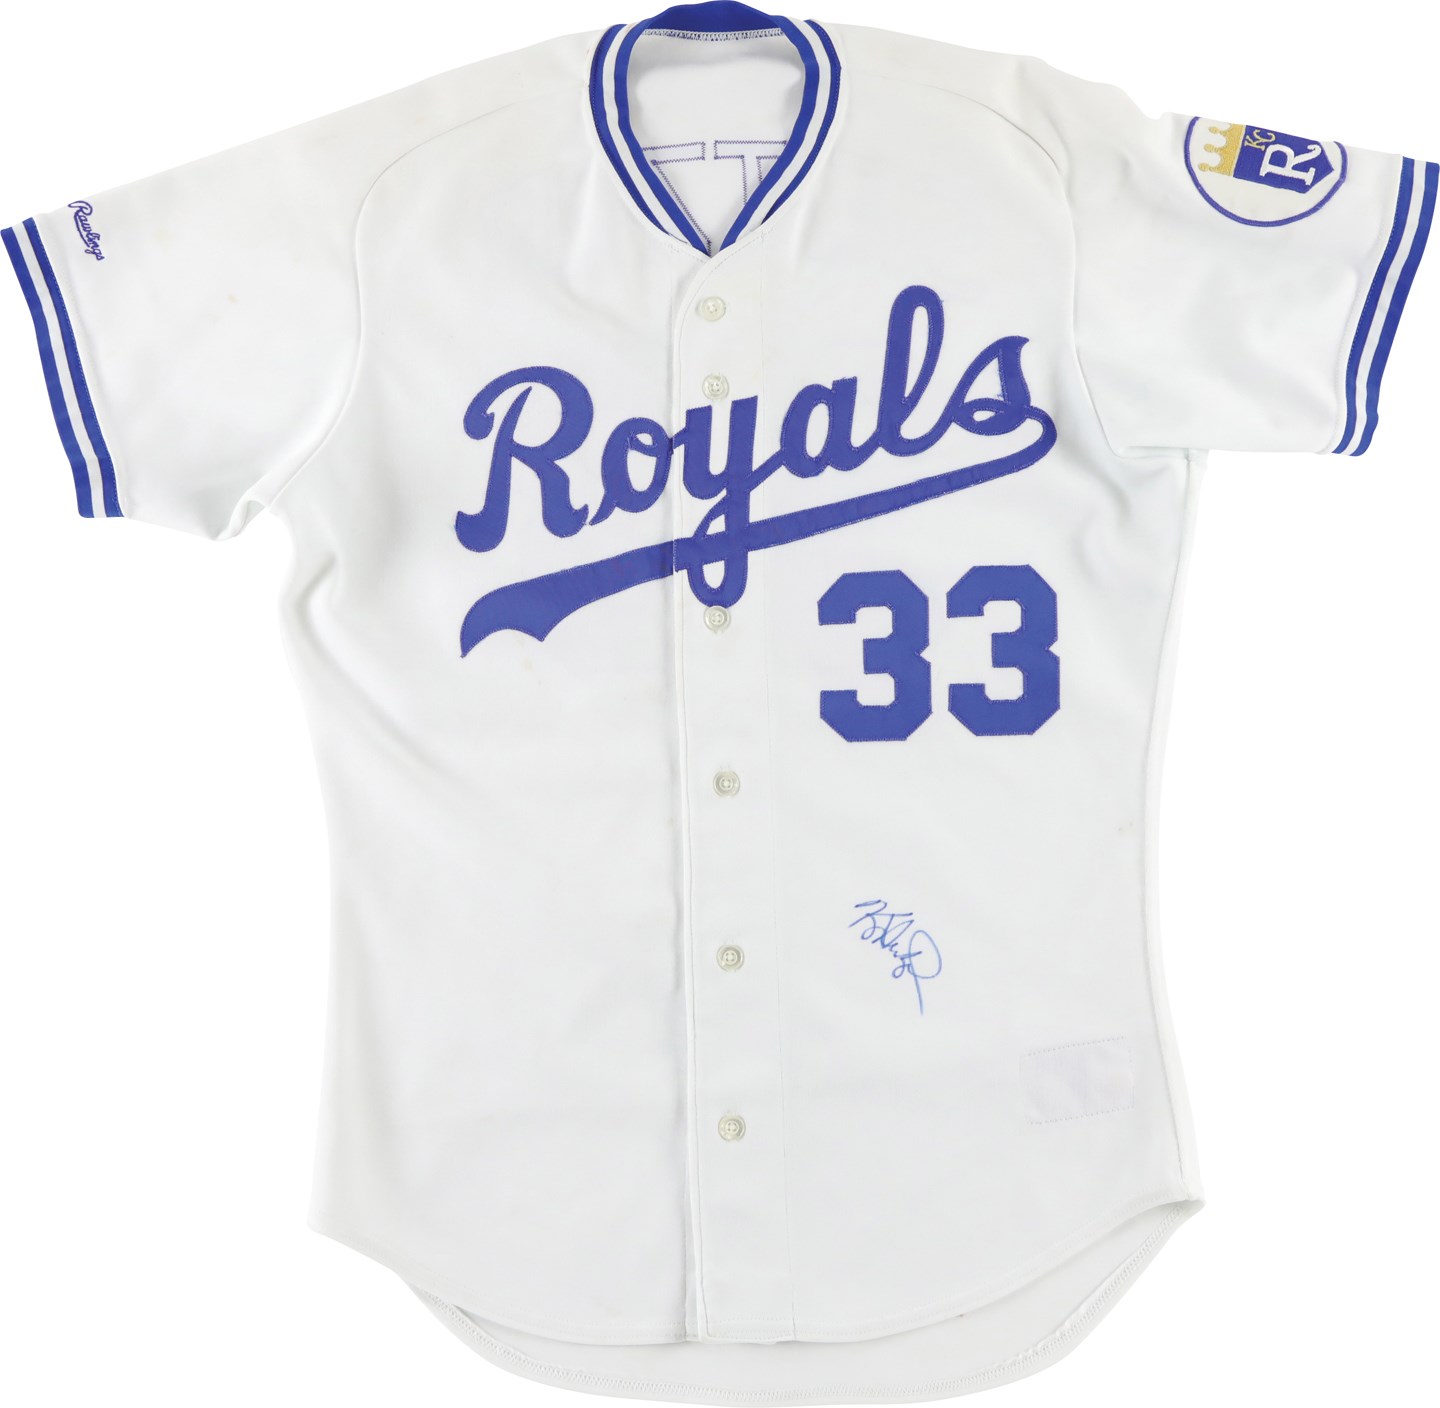 Baseball Equipment - 1988 Kevin Seitzer Kansas City Royals Signed Game Worn Jersey